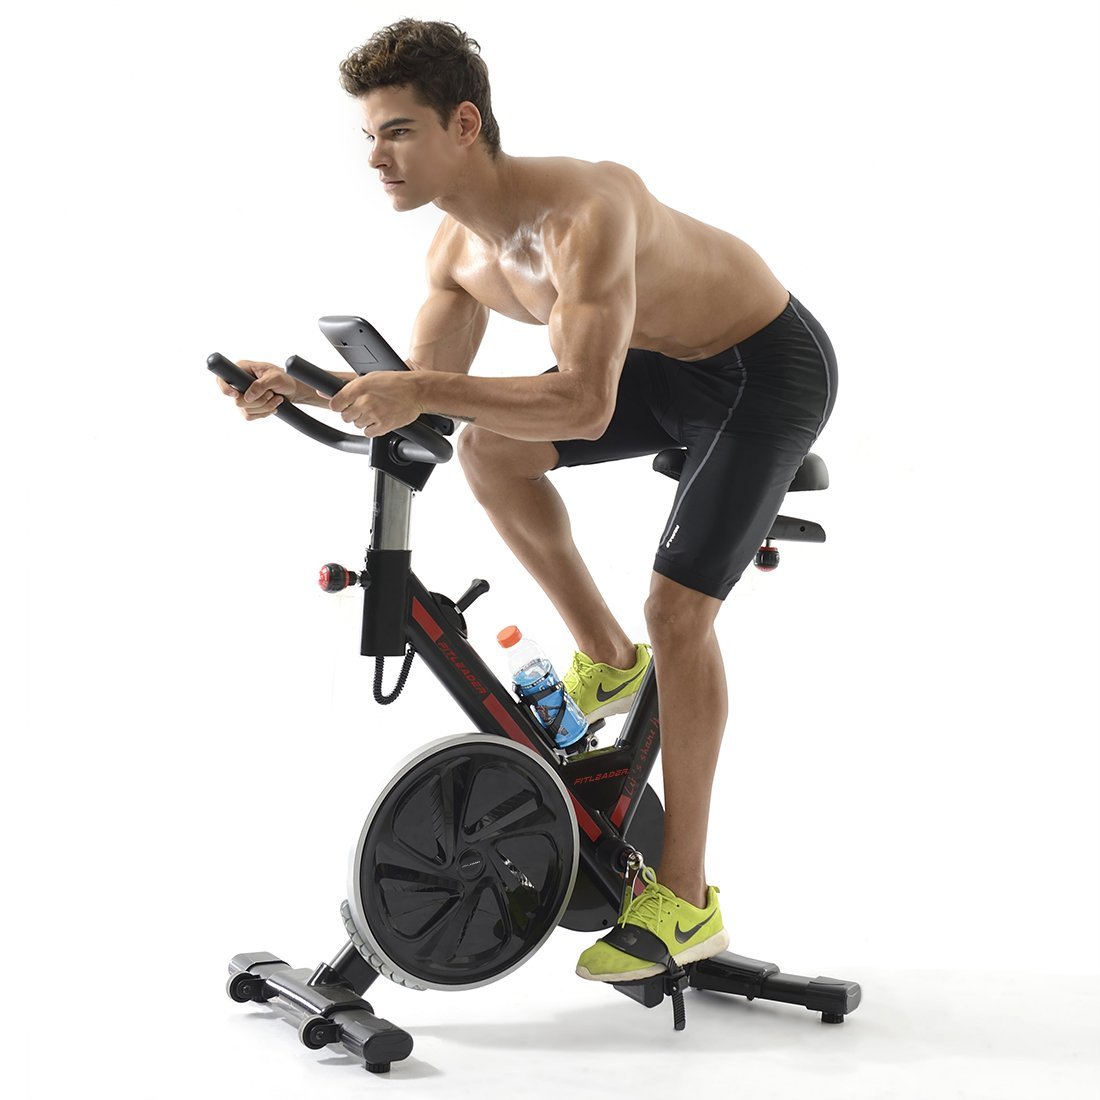 Fitleader Exercise Bike Fitness Indoor Workout F101D